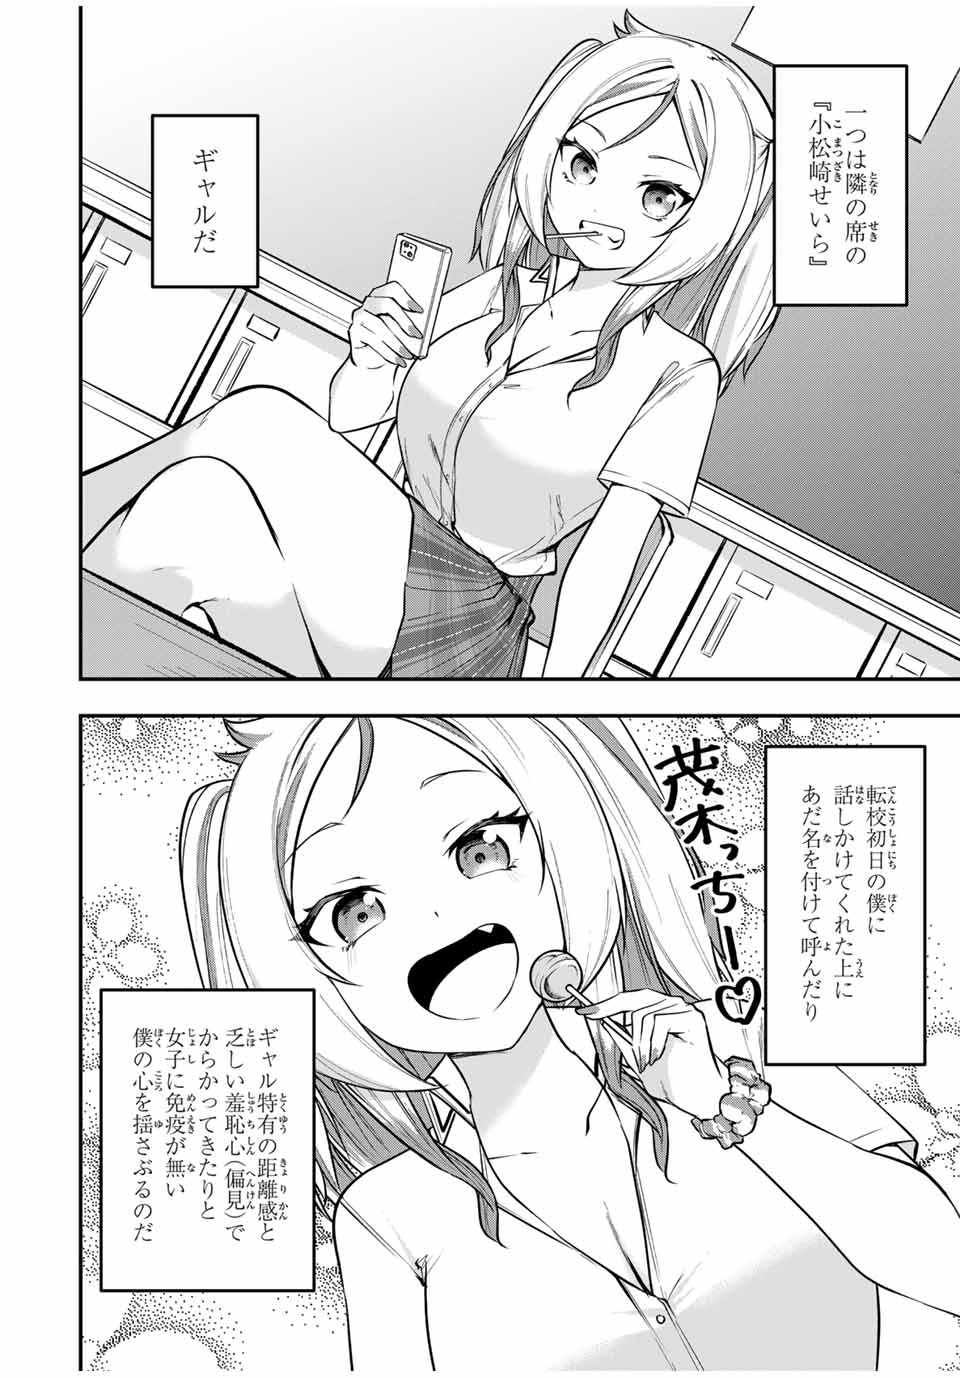 Heroine wa xx Okasegitai - Chapter 3 - Page 2